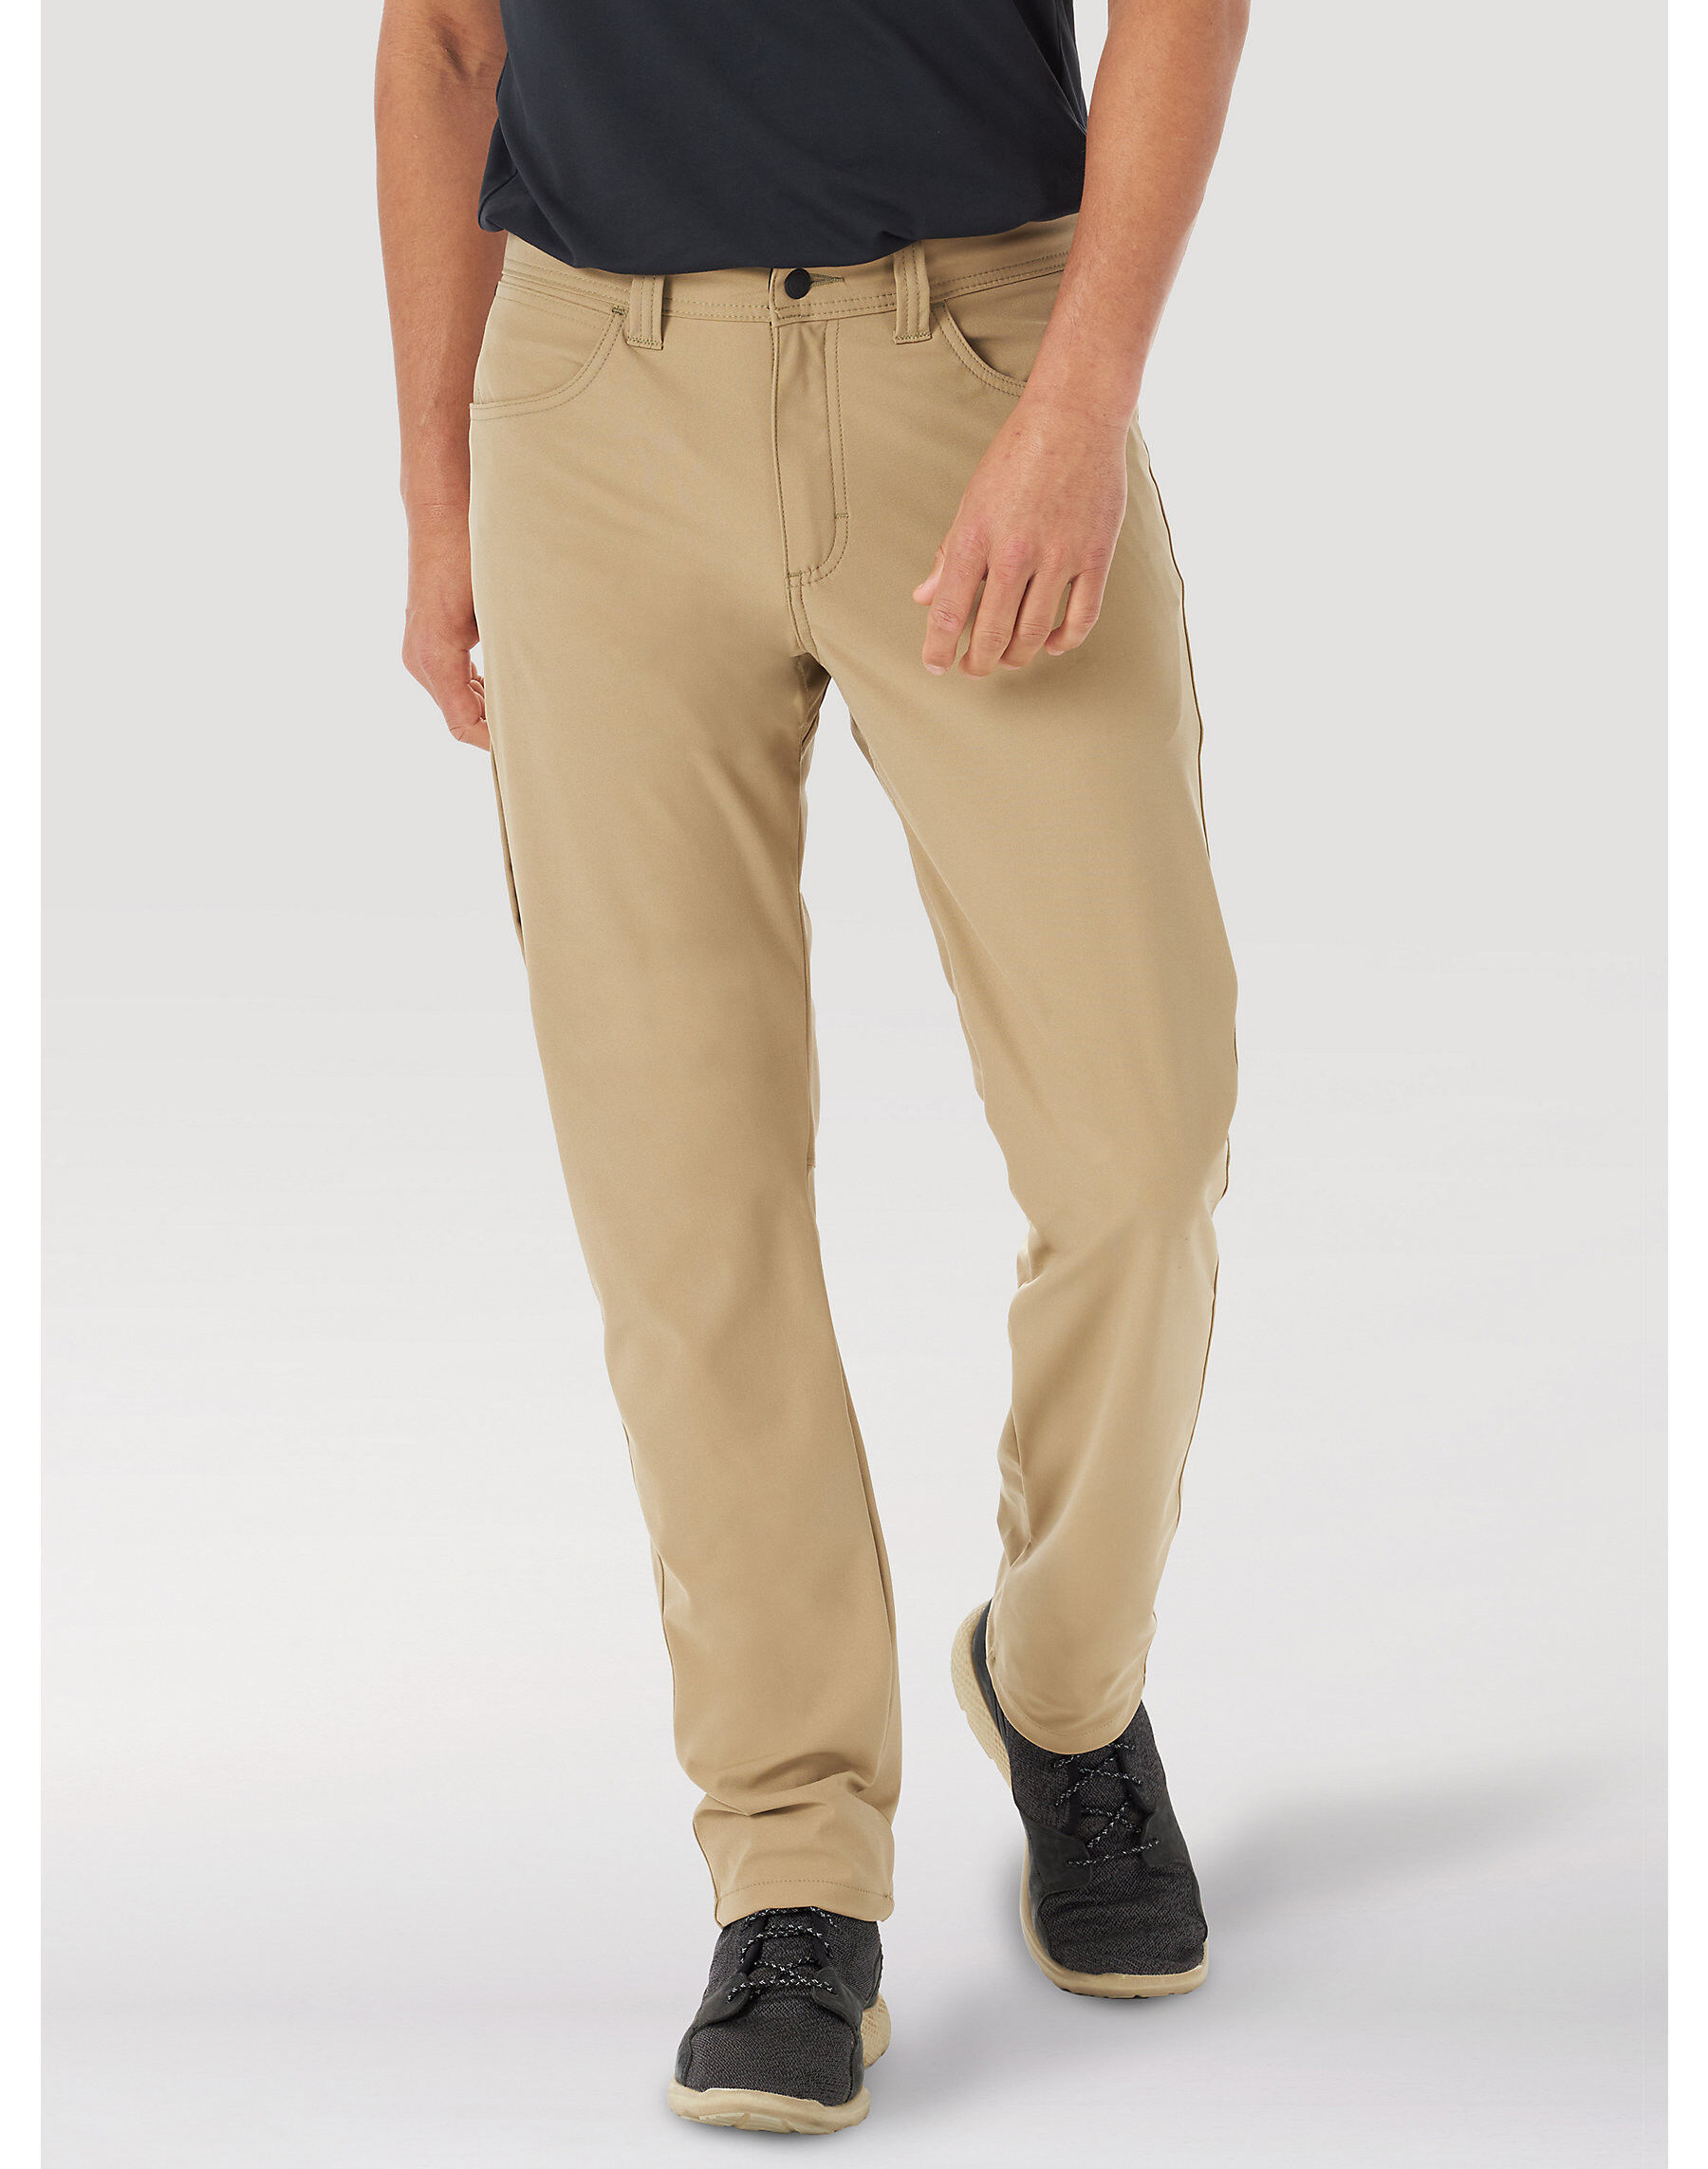 Wrangler All Terrain Gear Fwds 5 Pocket Pant - Walking trousers - Men's | Hardloop